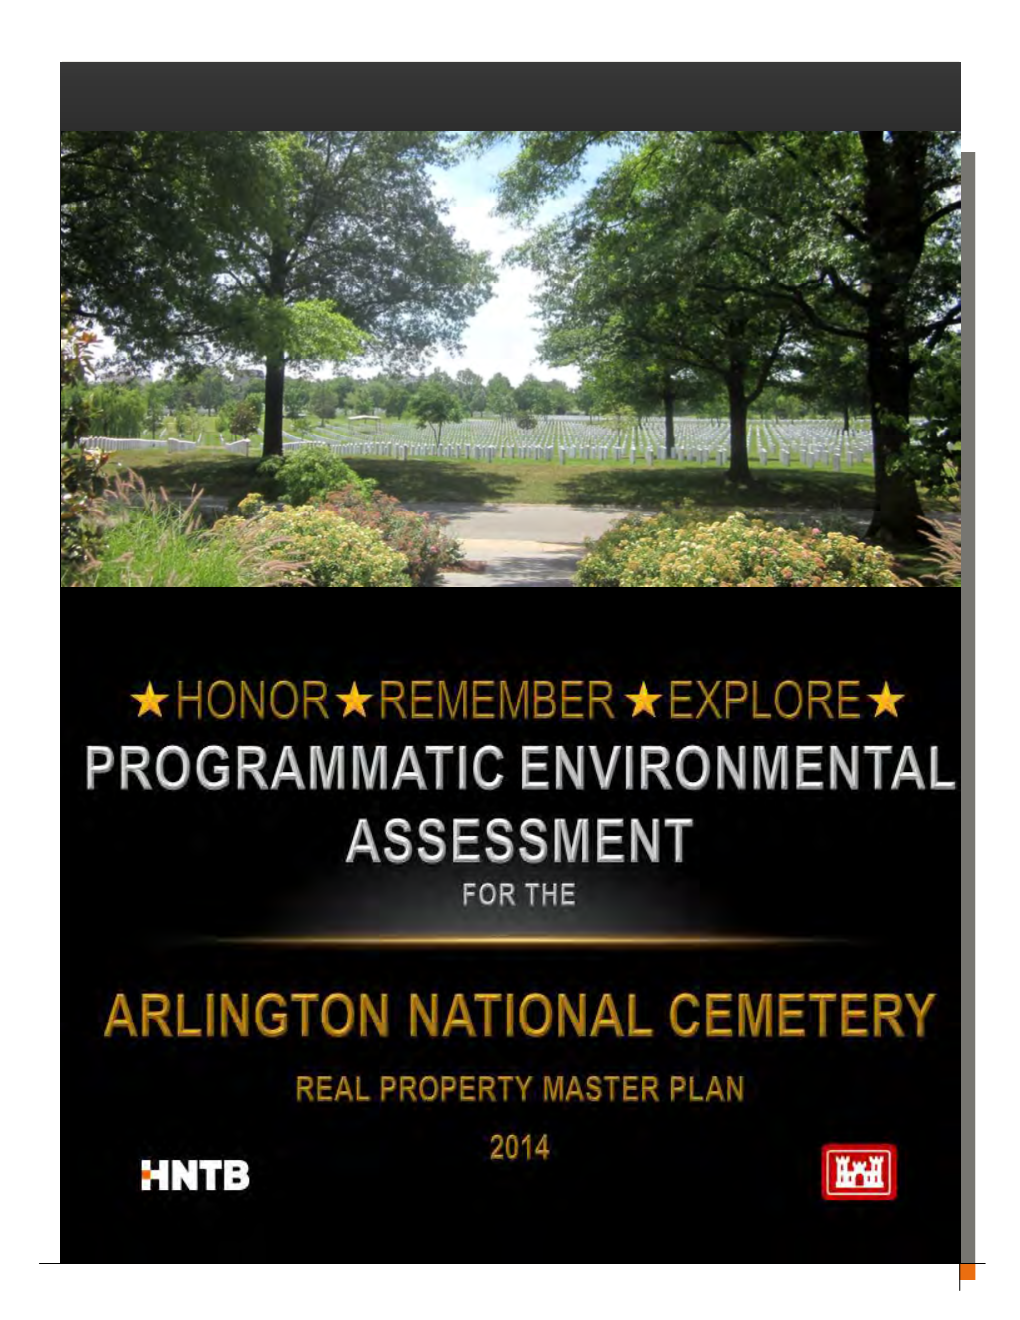 Arlington National Cemetery Real Property Master Plan